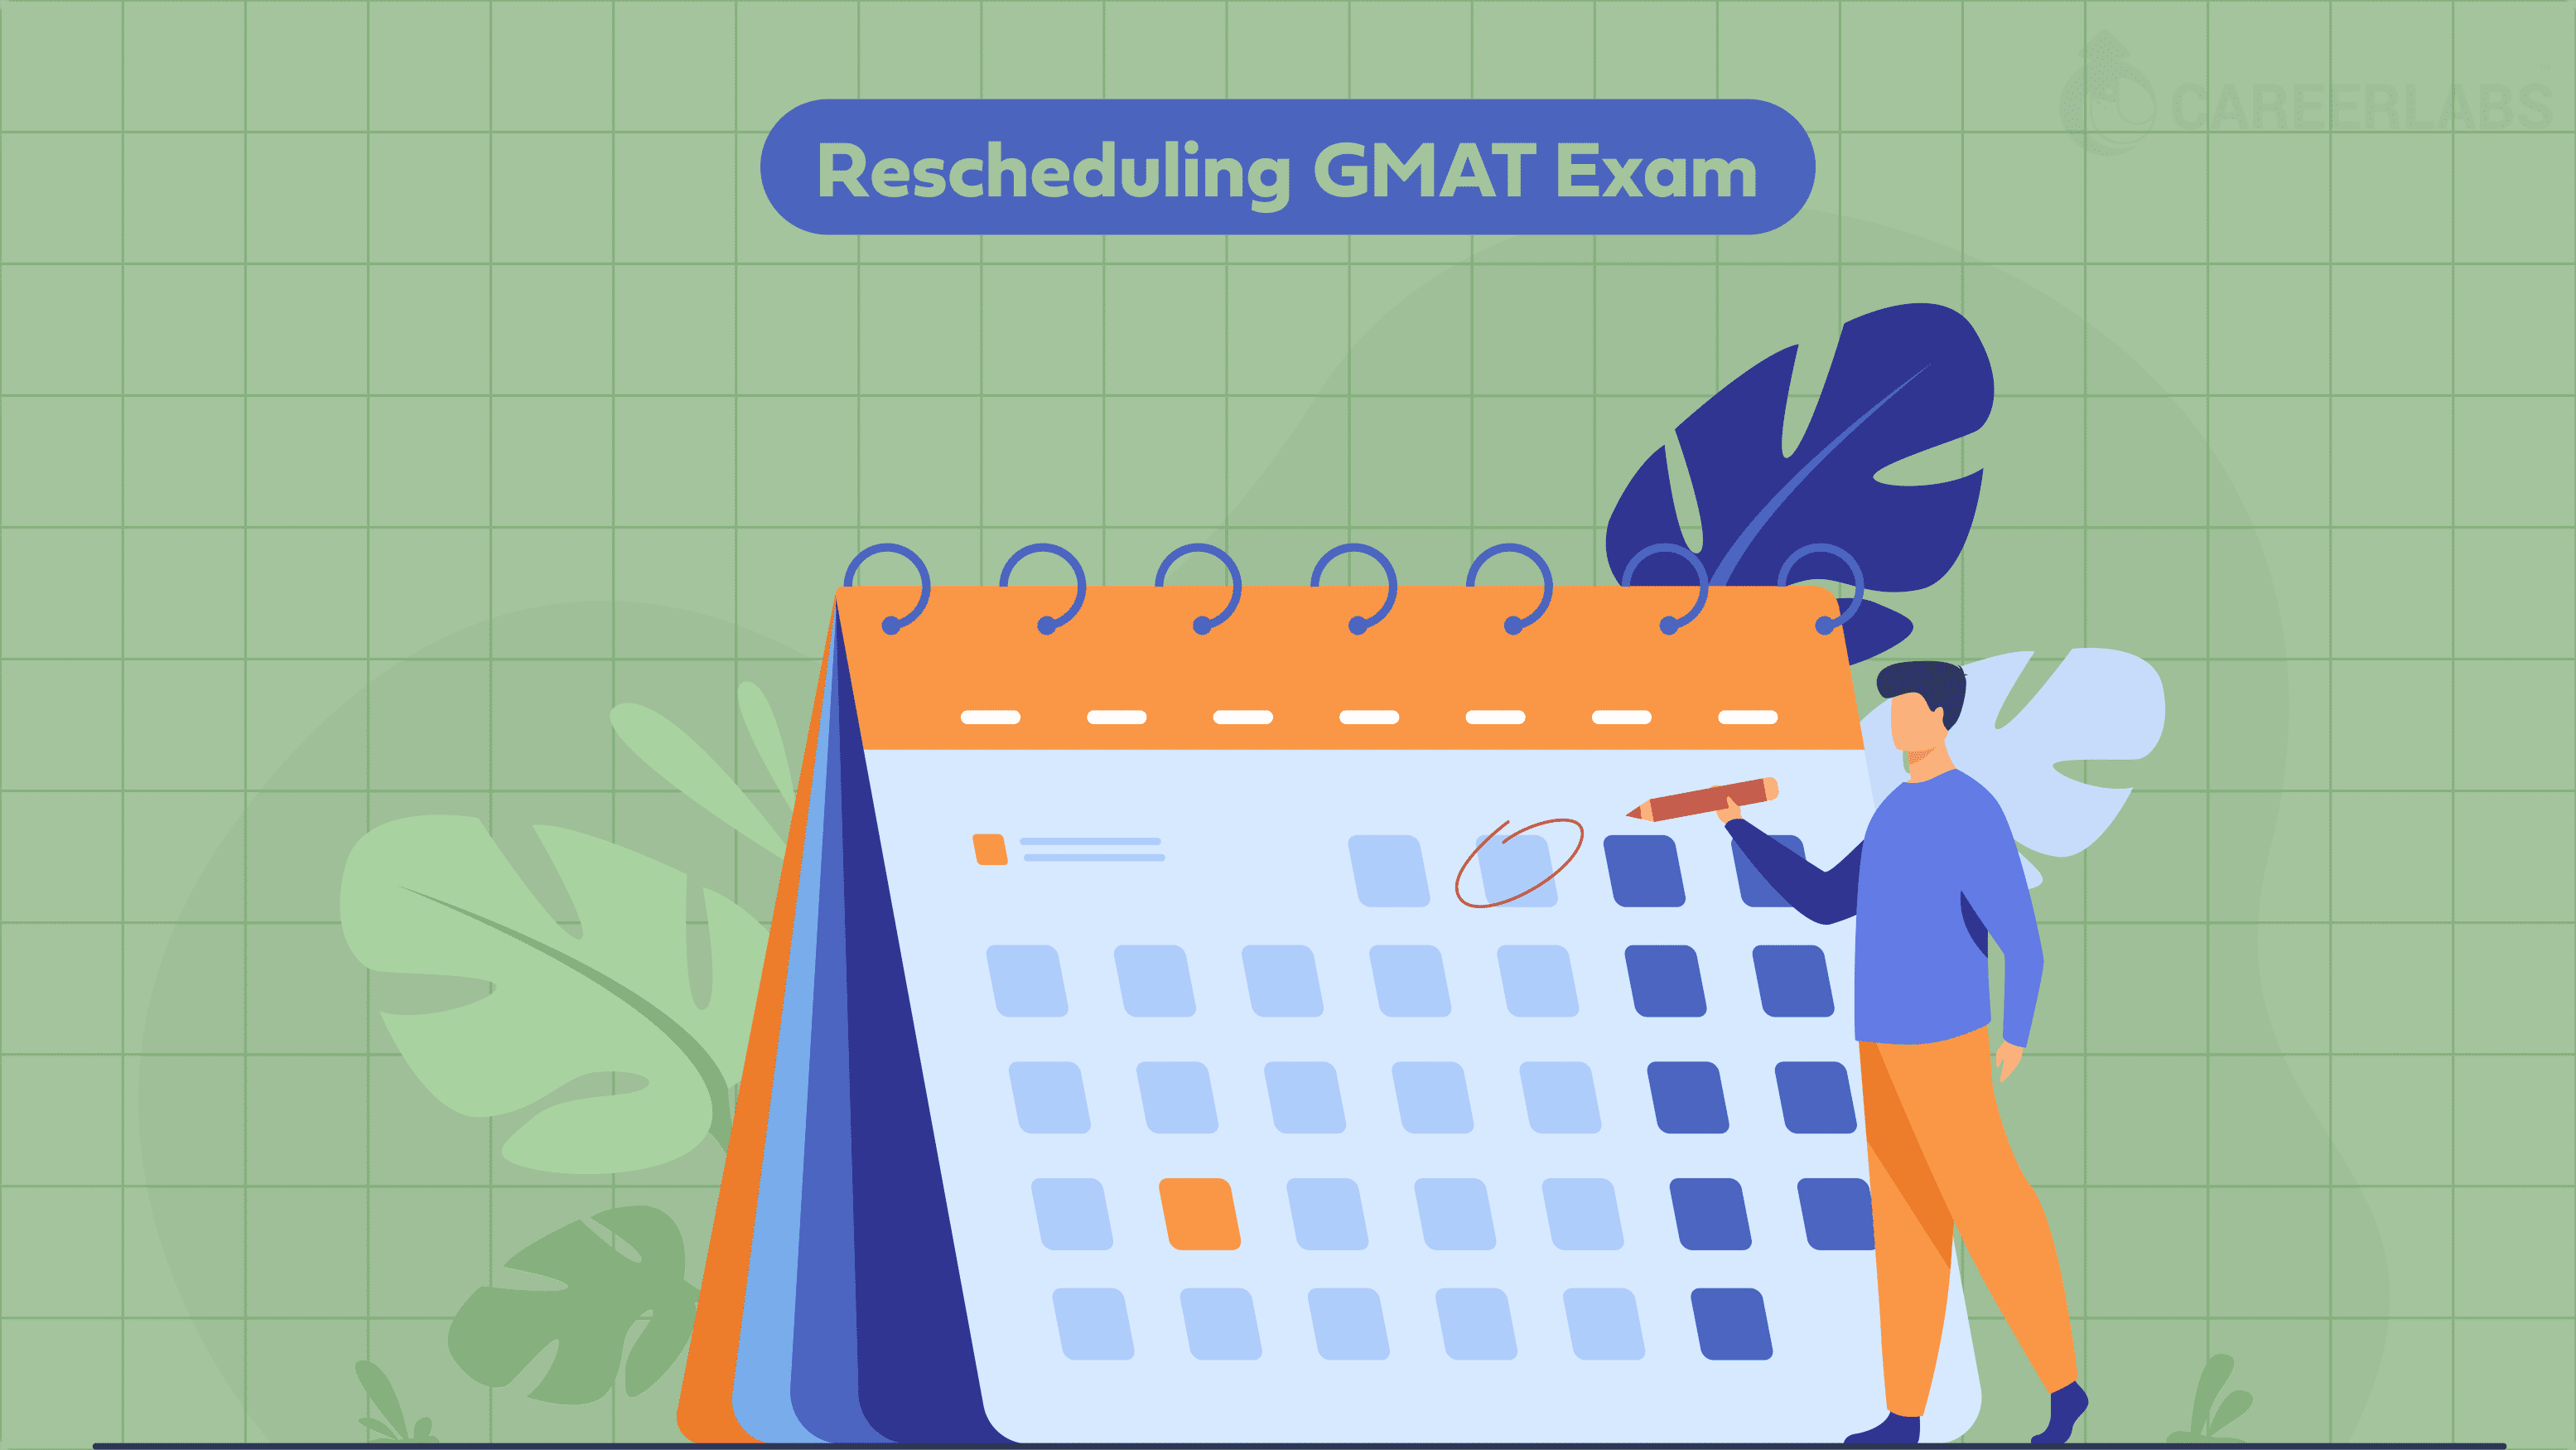 GMAT Exam Reschedule